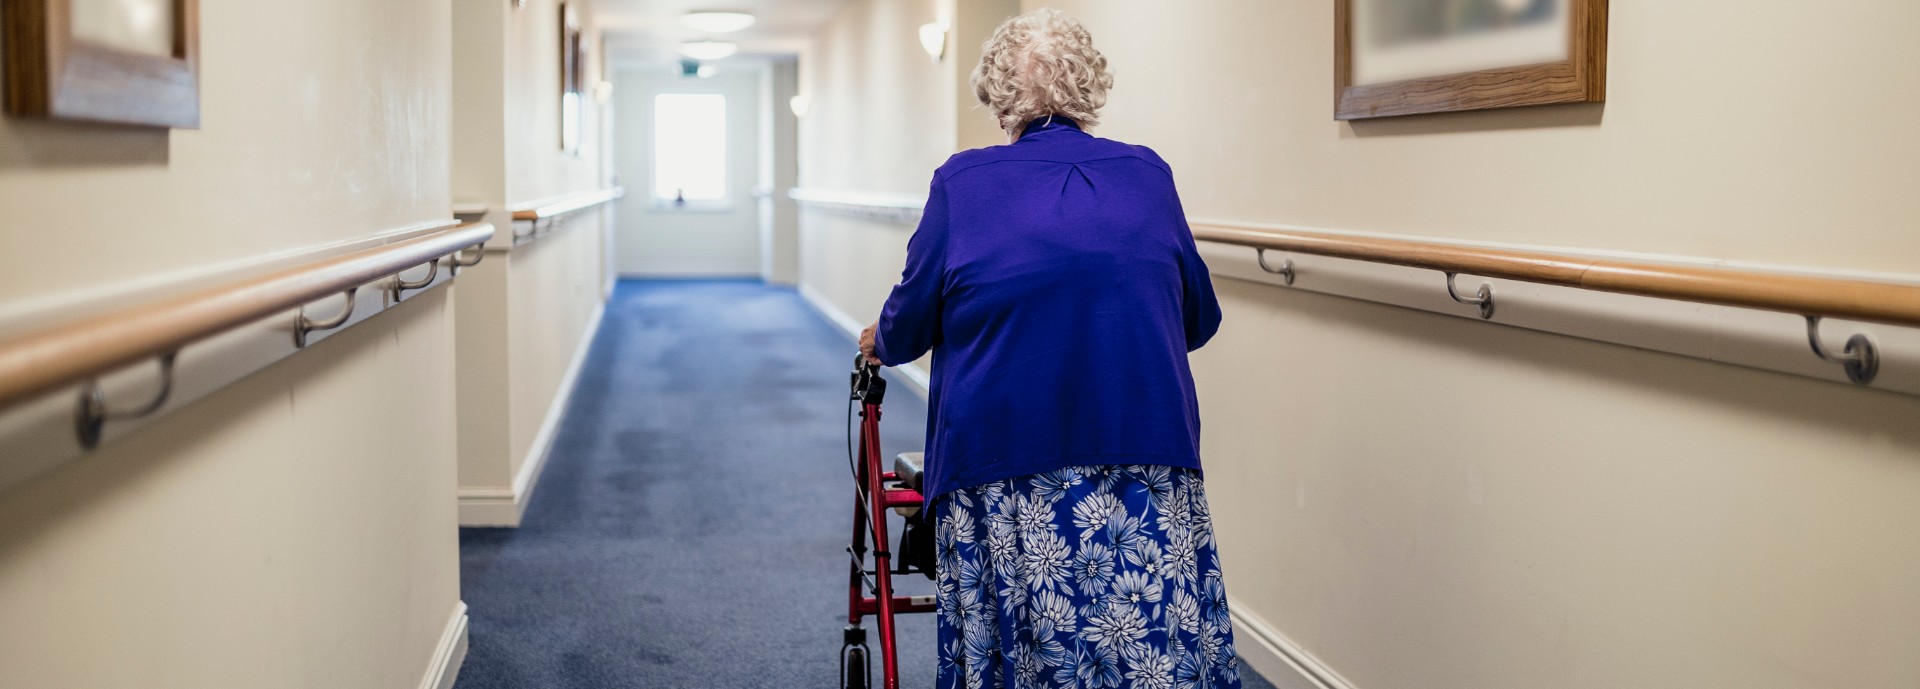 Elderly woman walks along hall using a walking frame